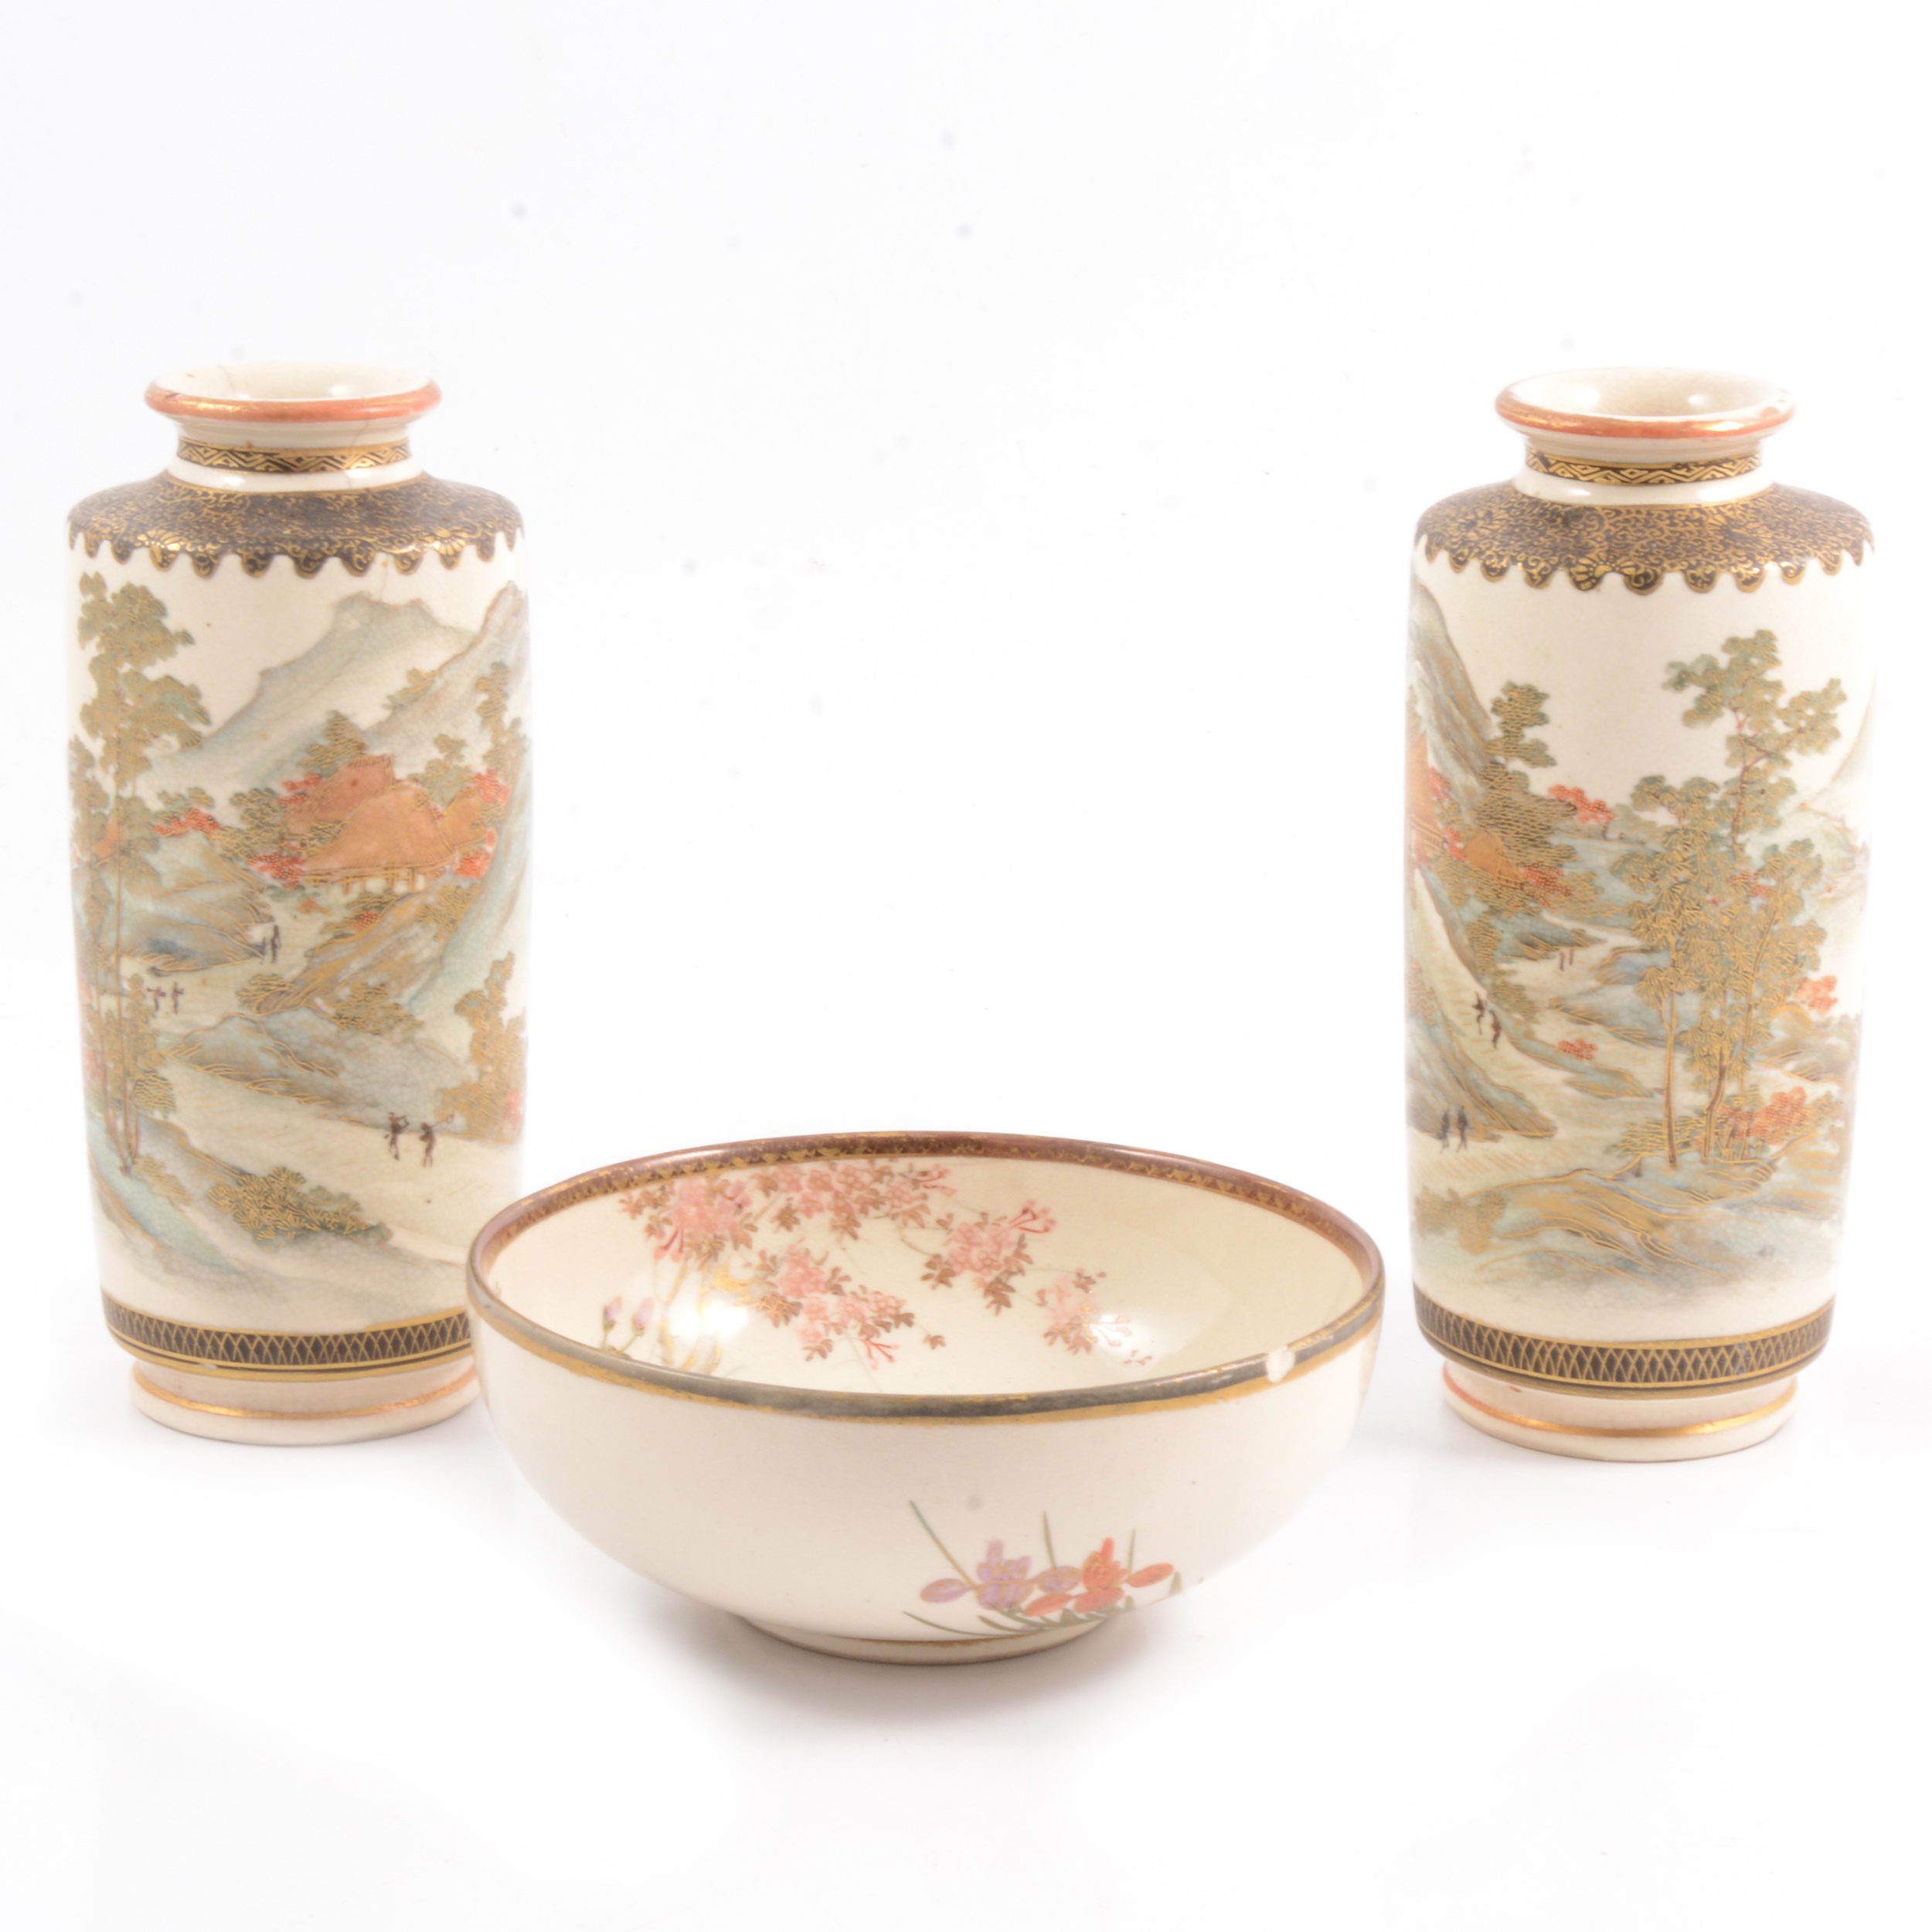 Pair of Japanese Satsuma vases and a small bowl.